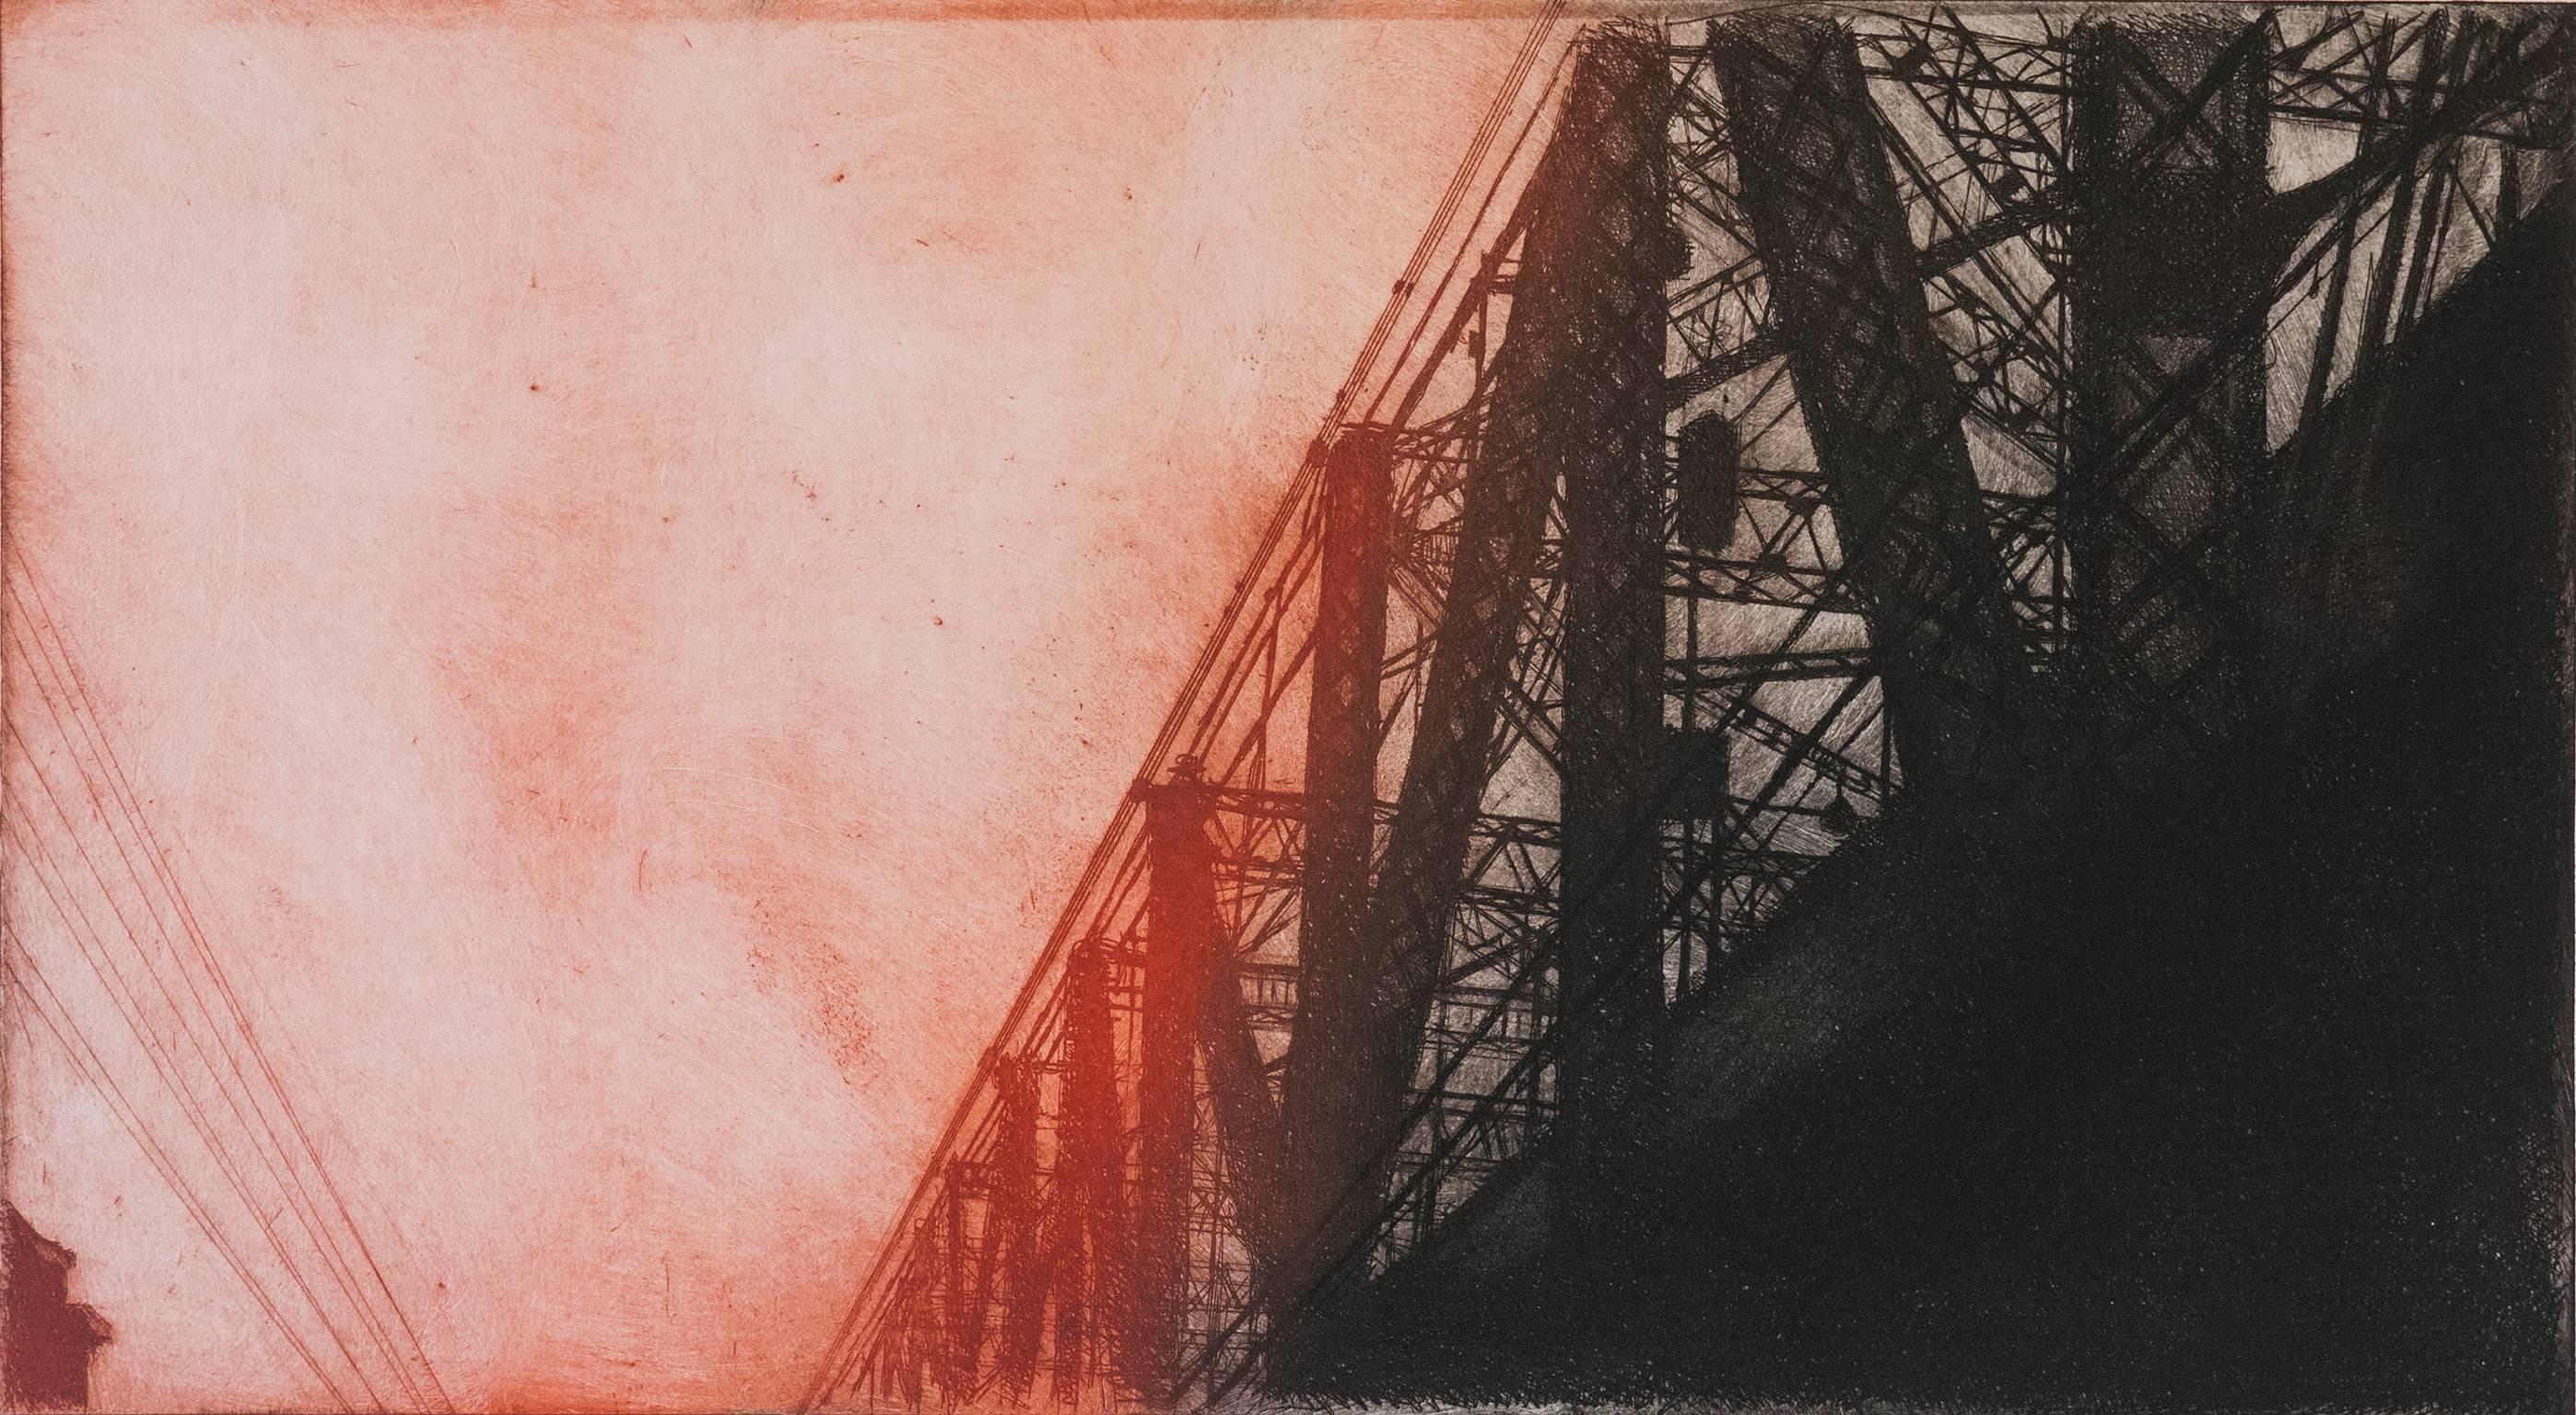 Steve Stankiewicz Landscape Print - "Queensboro Bridge 5", urban landscape etching, aquatint, black, red. New York.